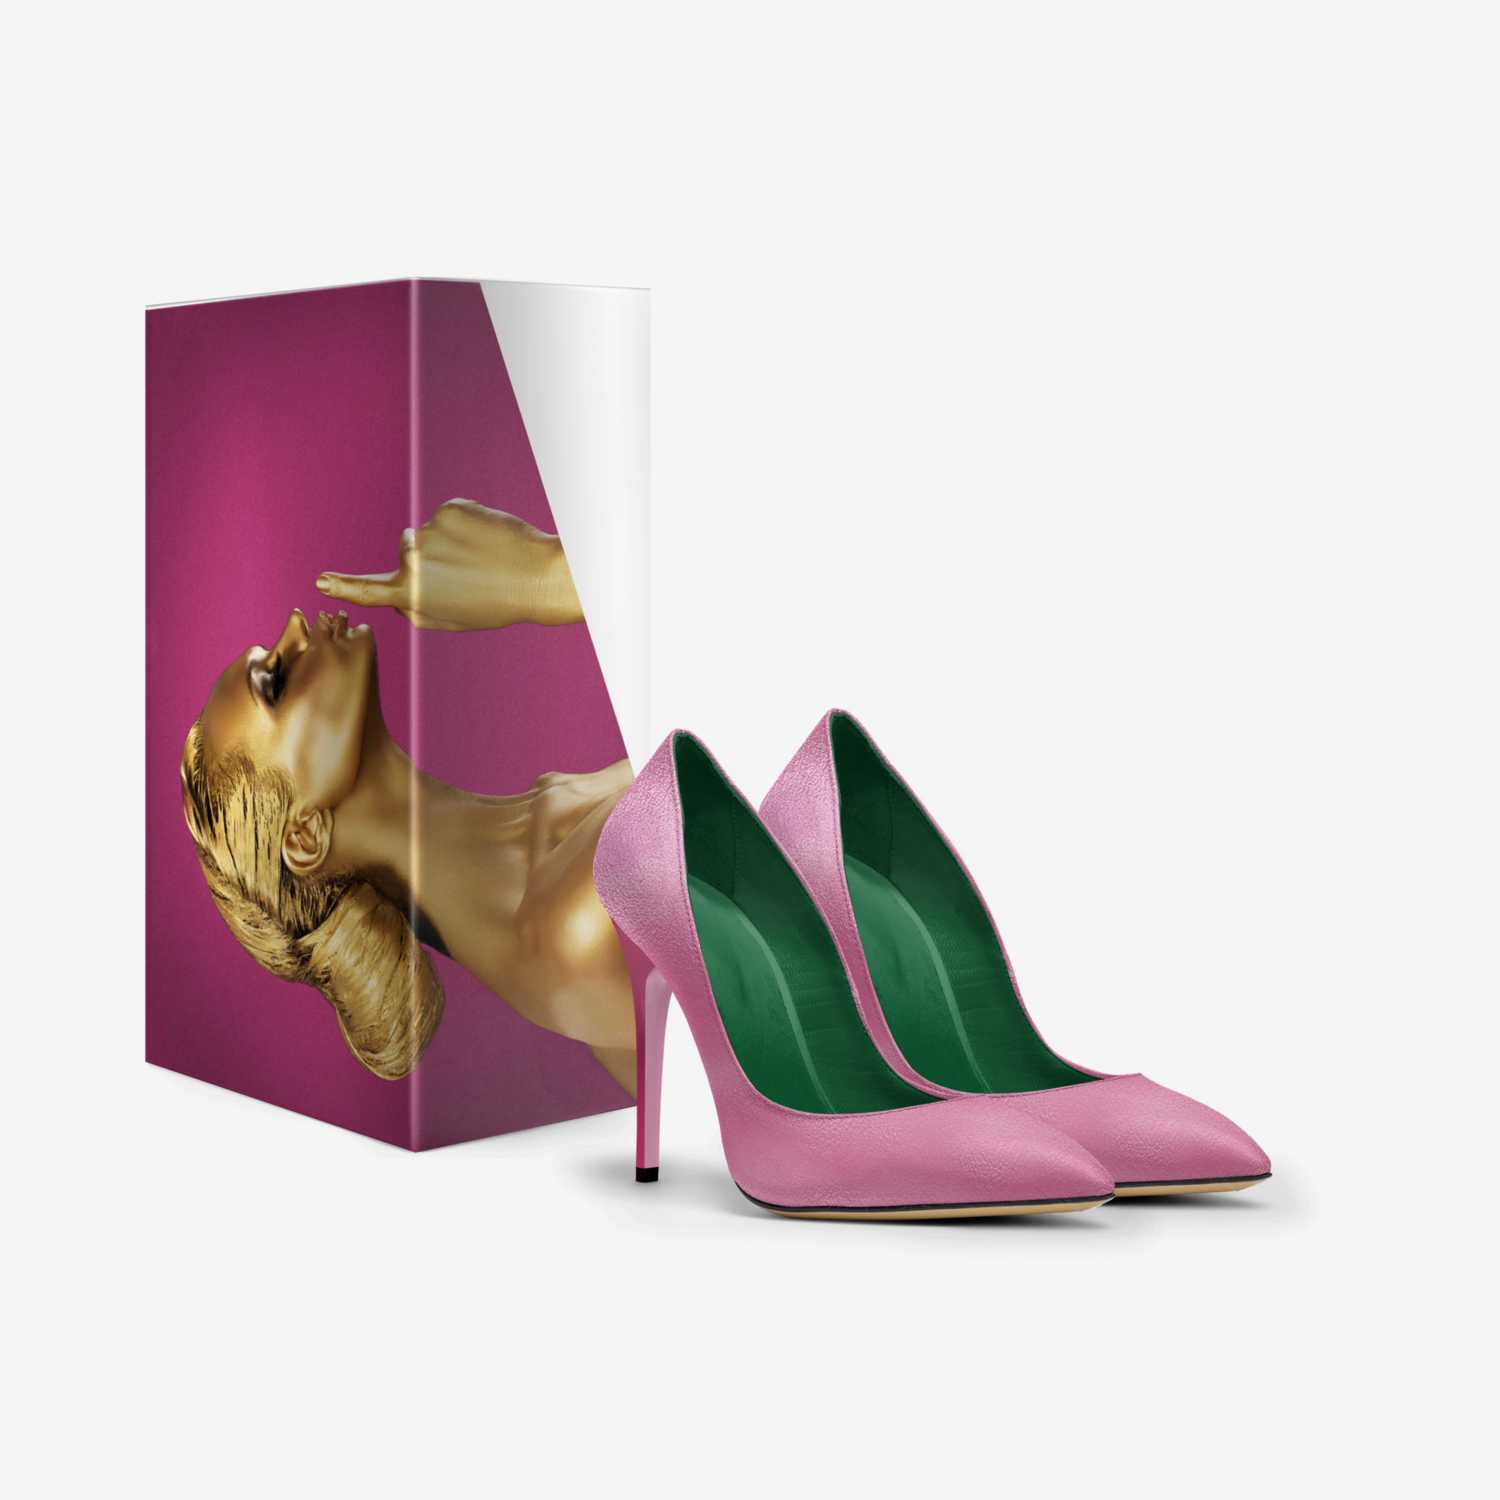 NG custom made in Italy shoes by Latoya Martin | Box view